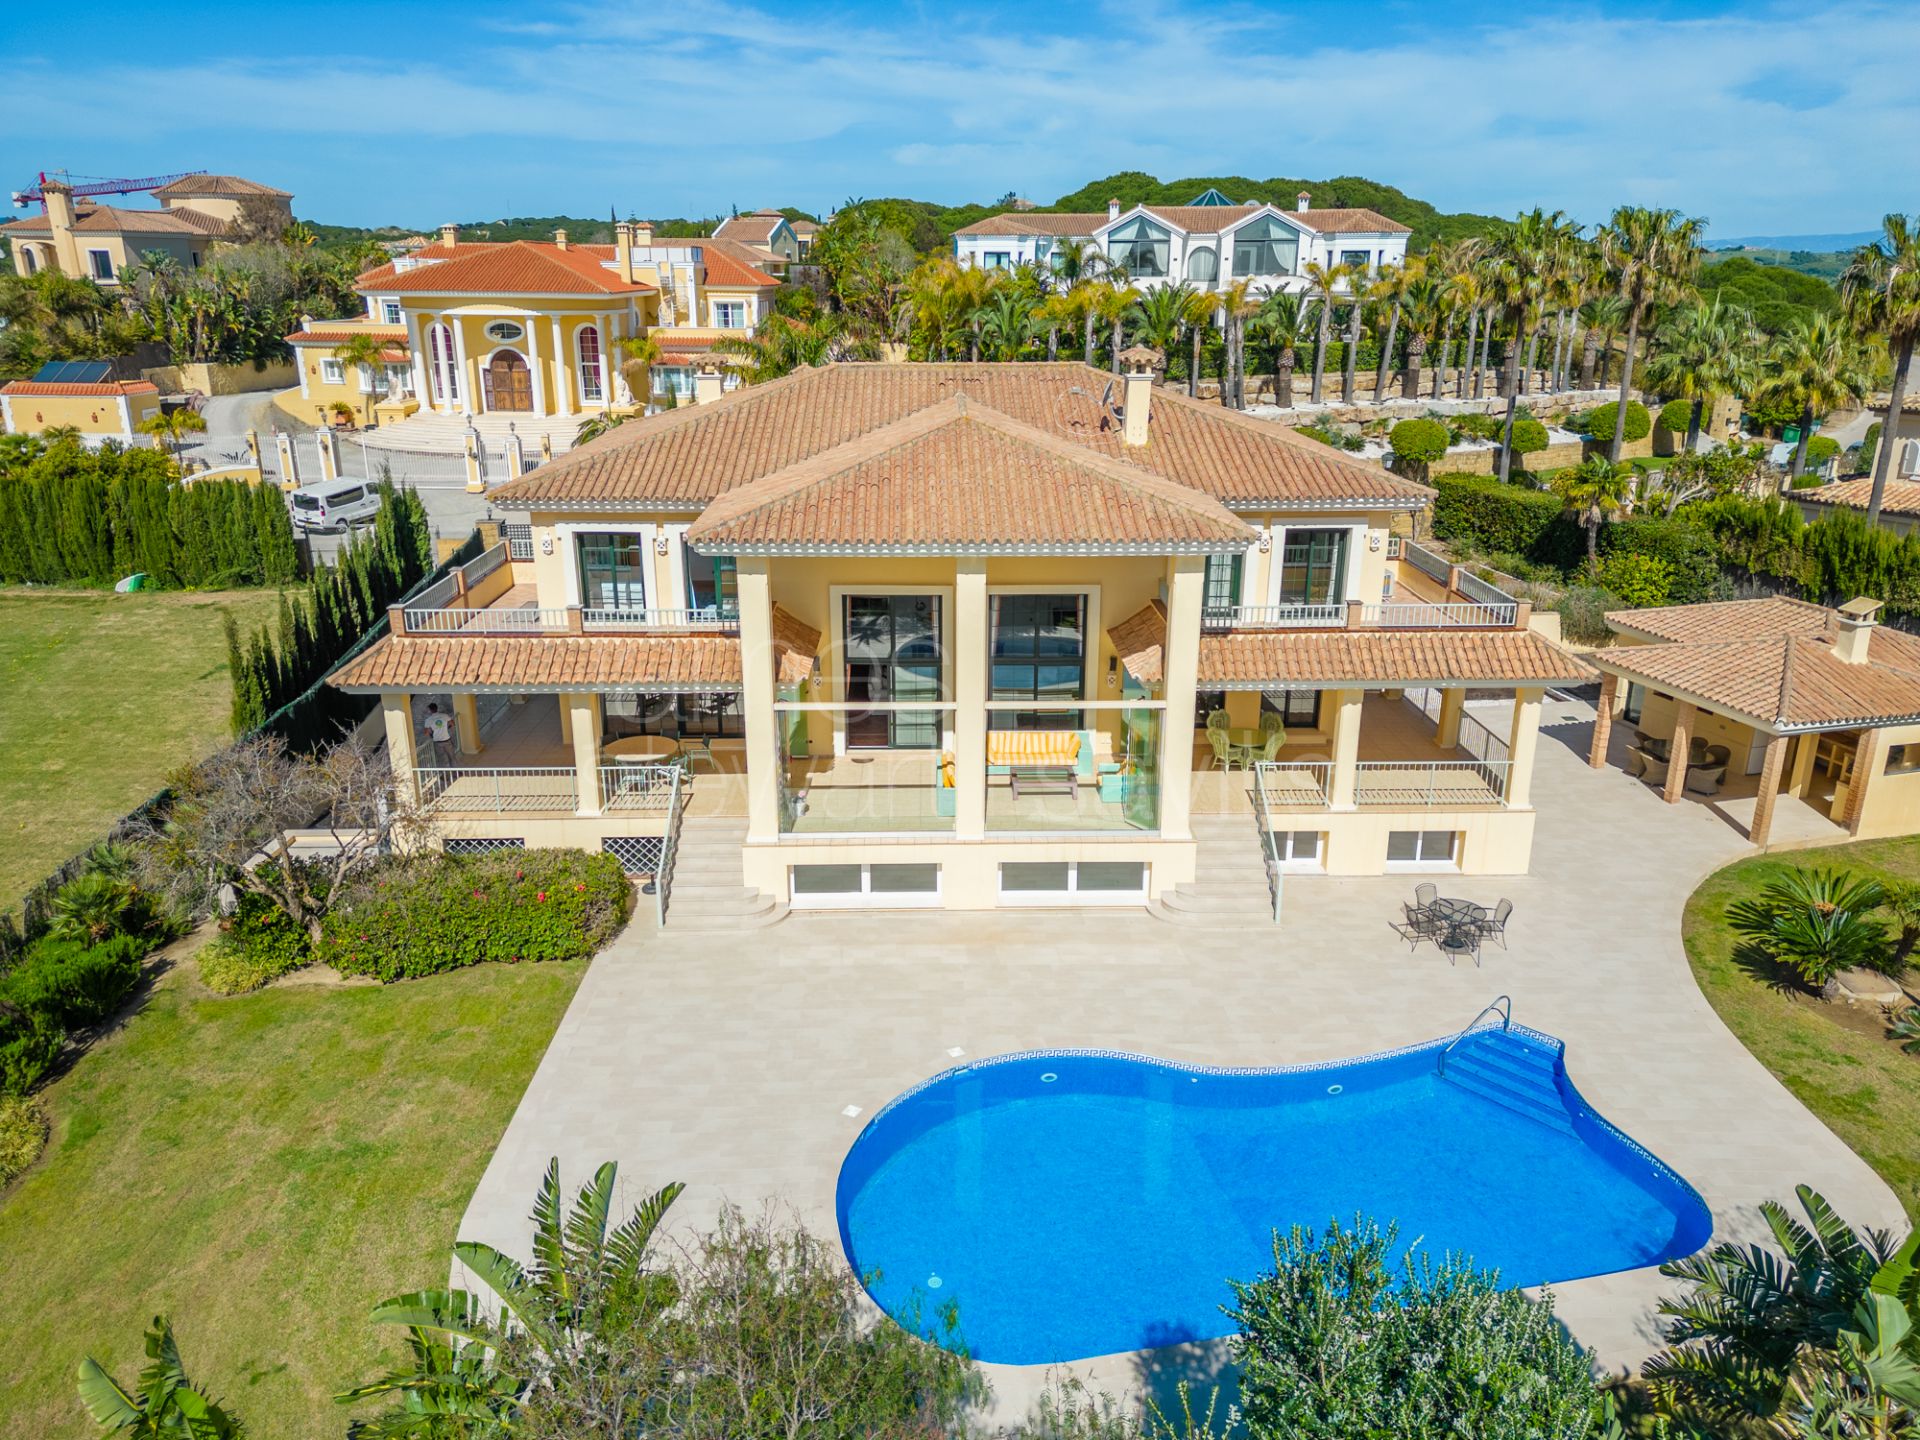 Villa with Sea Views near So-Sotogrande Hotel and Almenara Golf Course